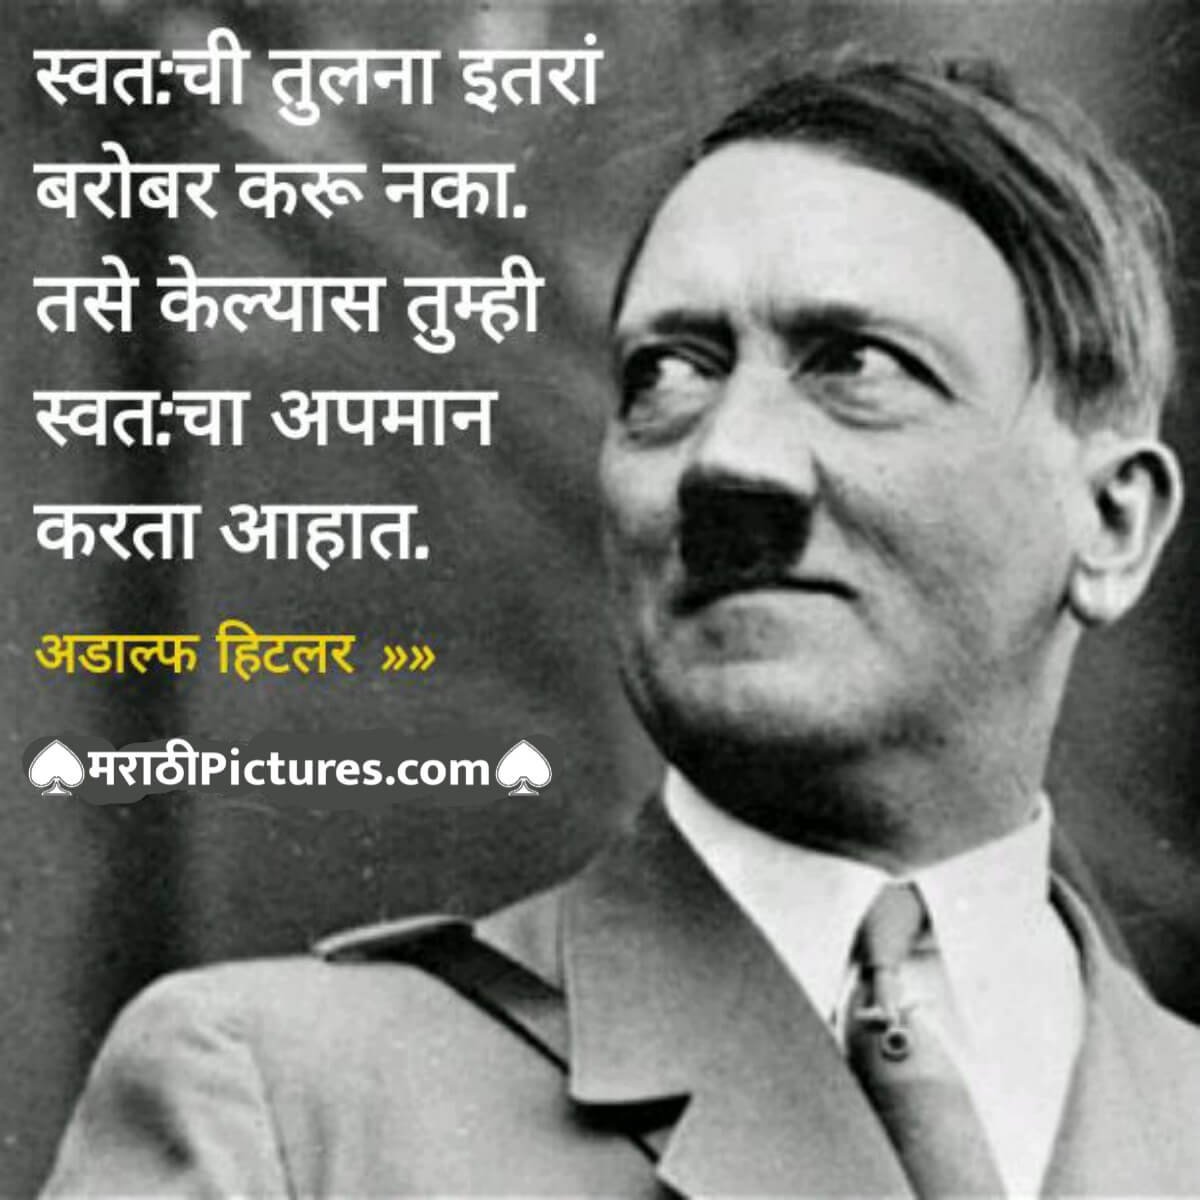 Adolf Hitler Quotes in Marathi